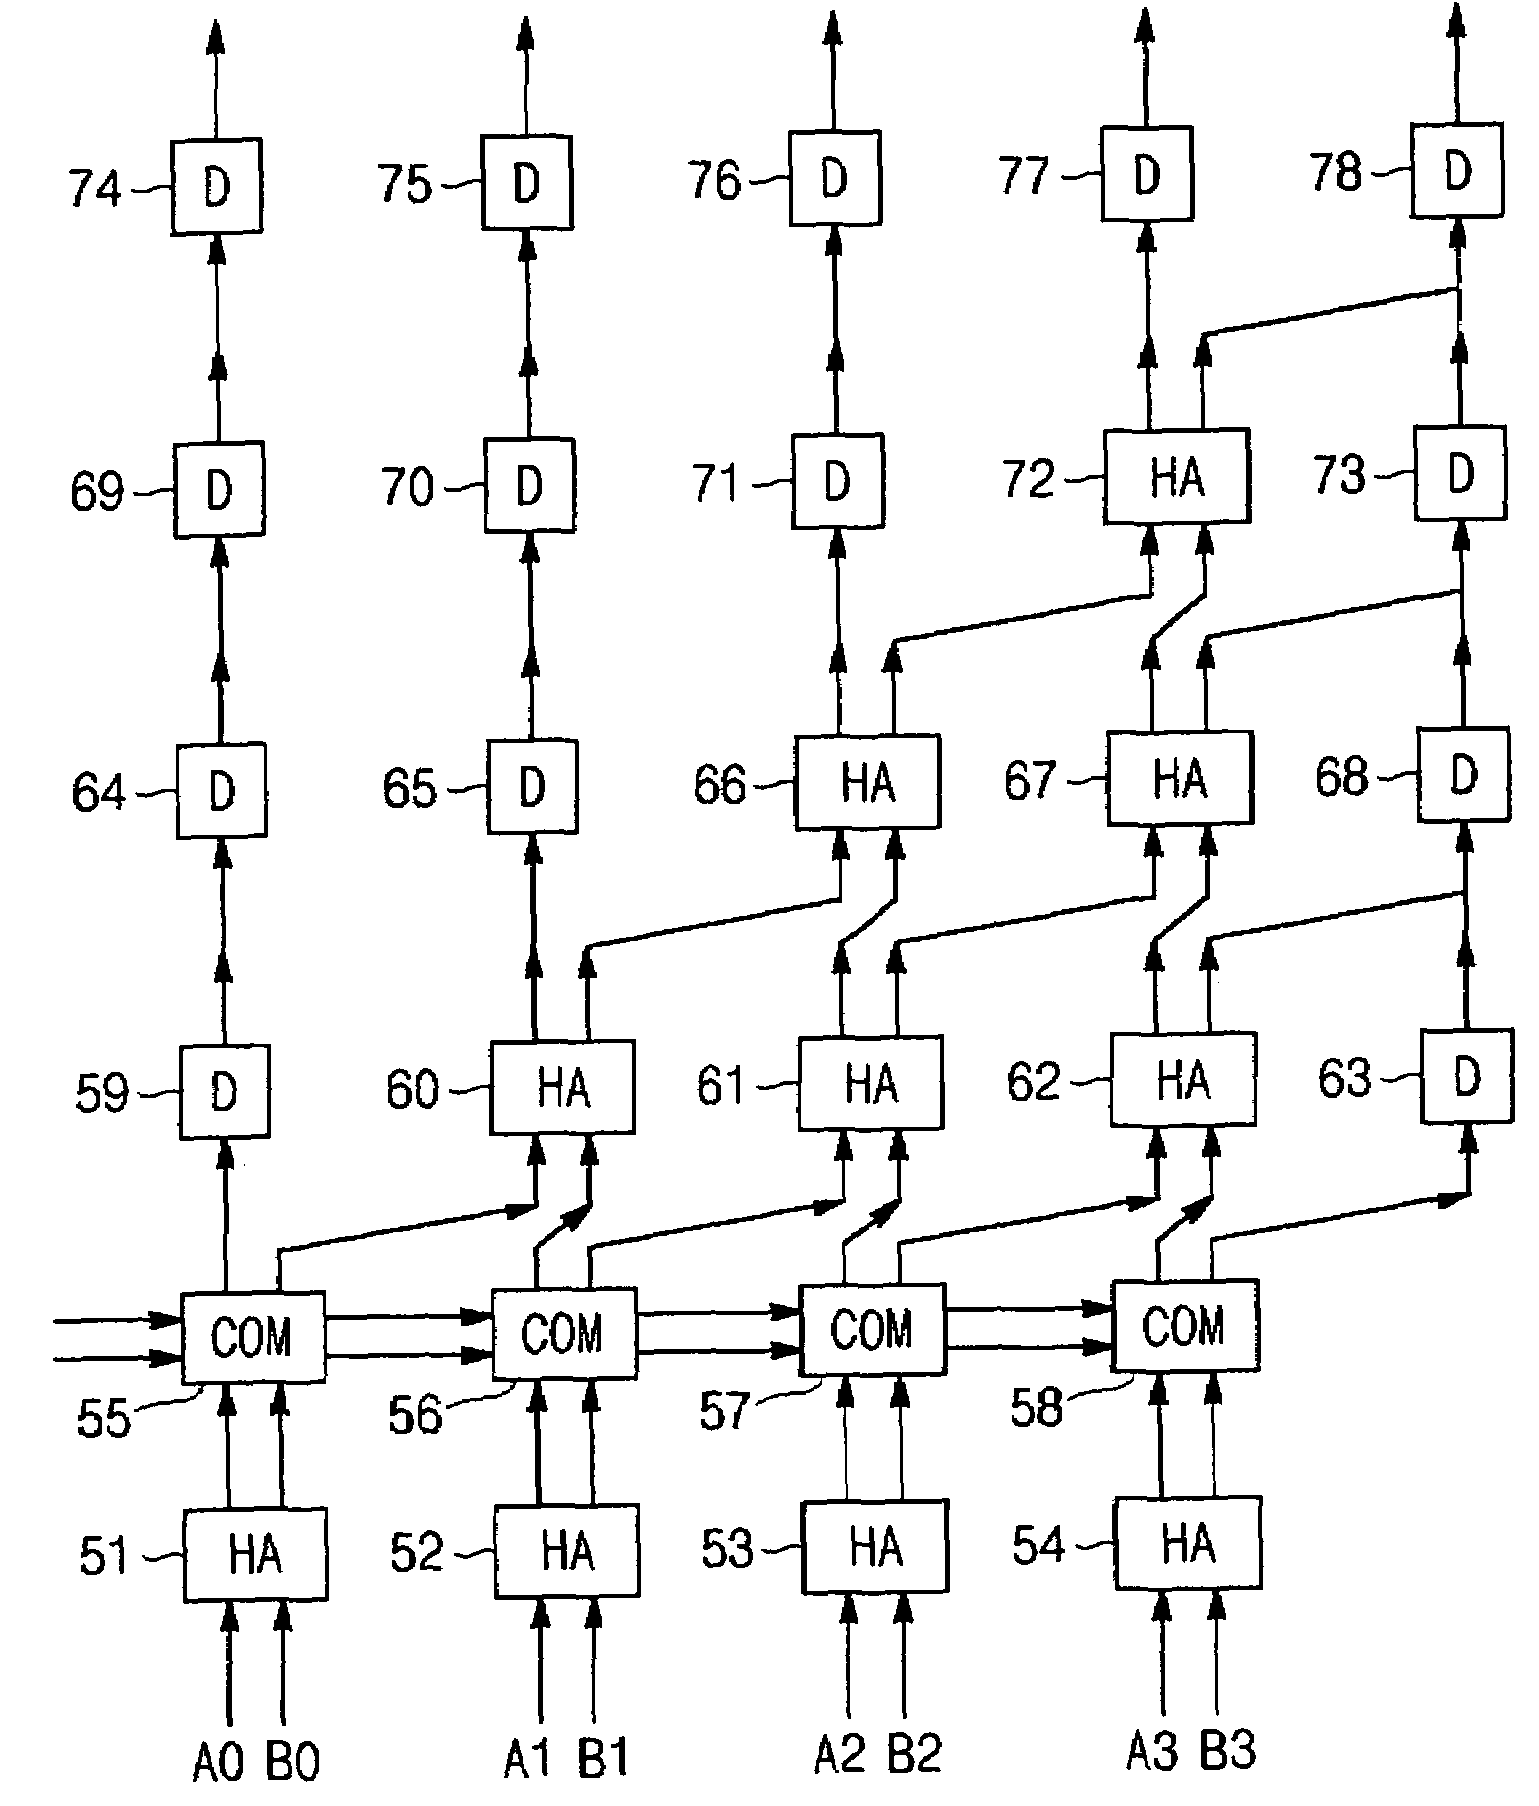 Arithmetic and logic unit using half adder